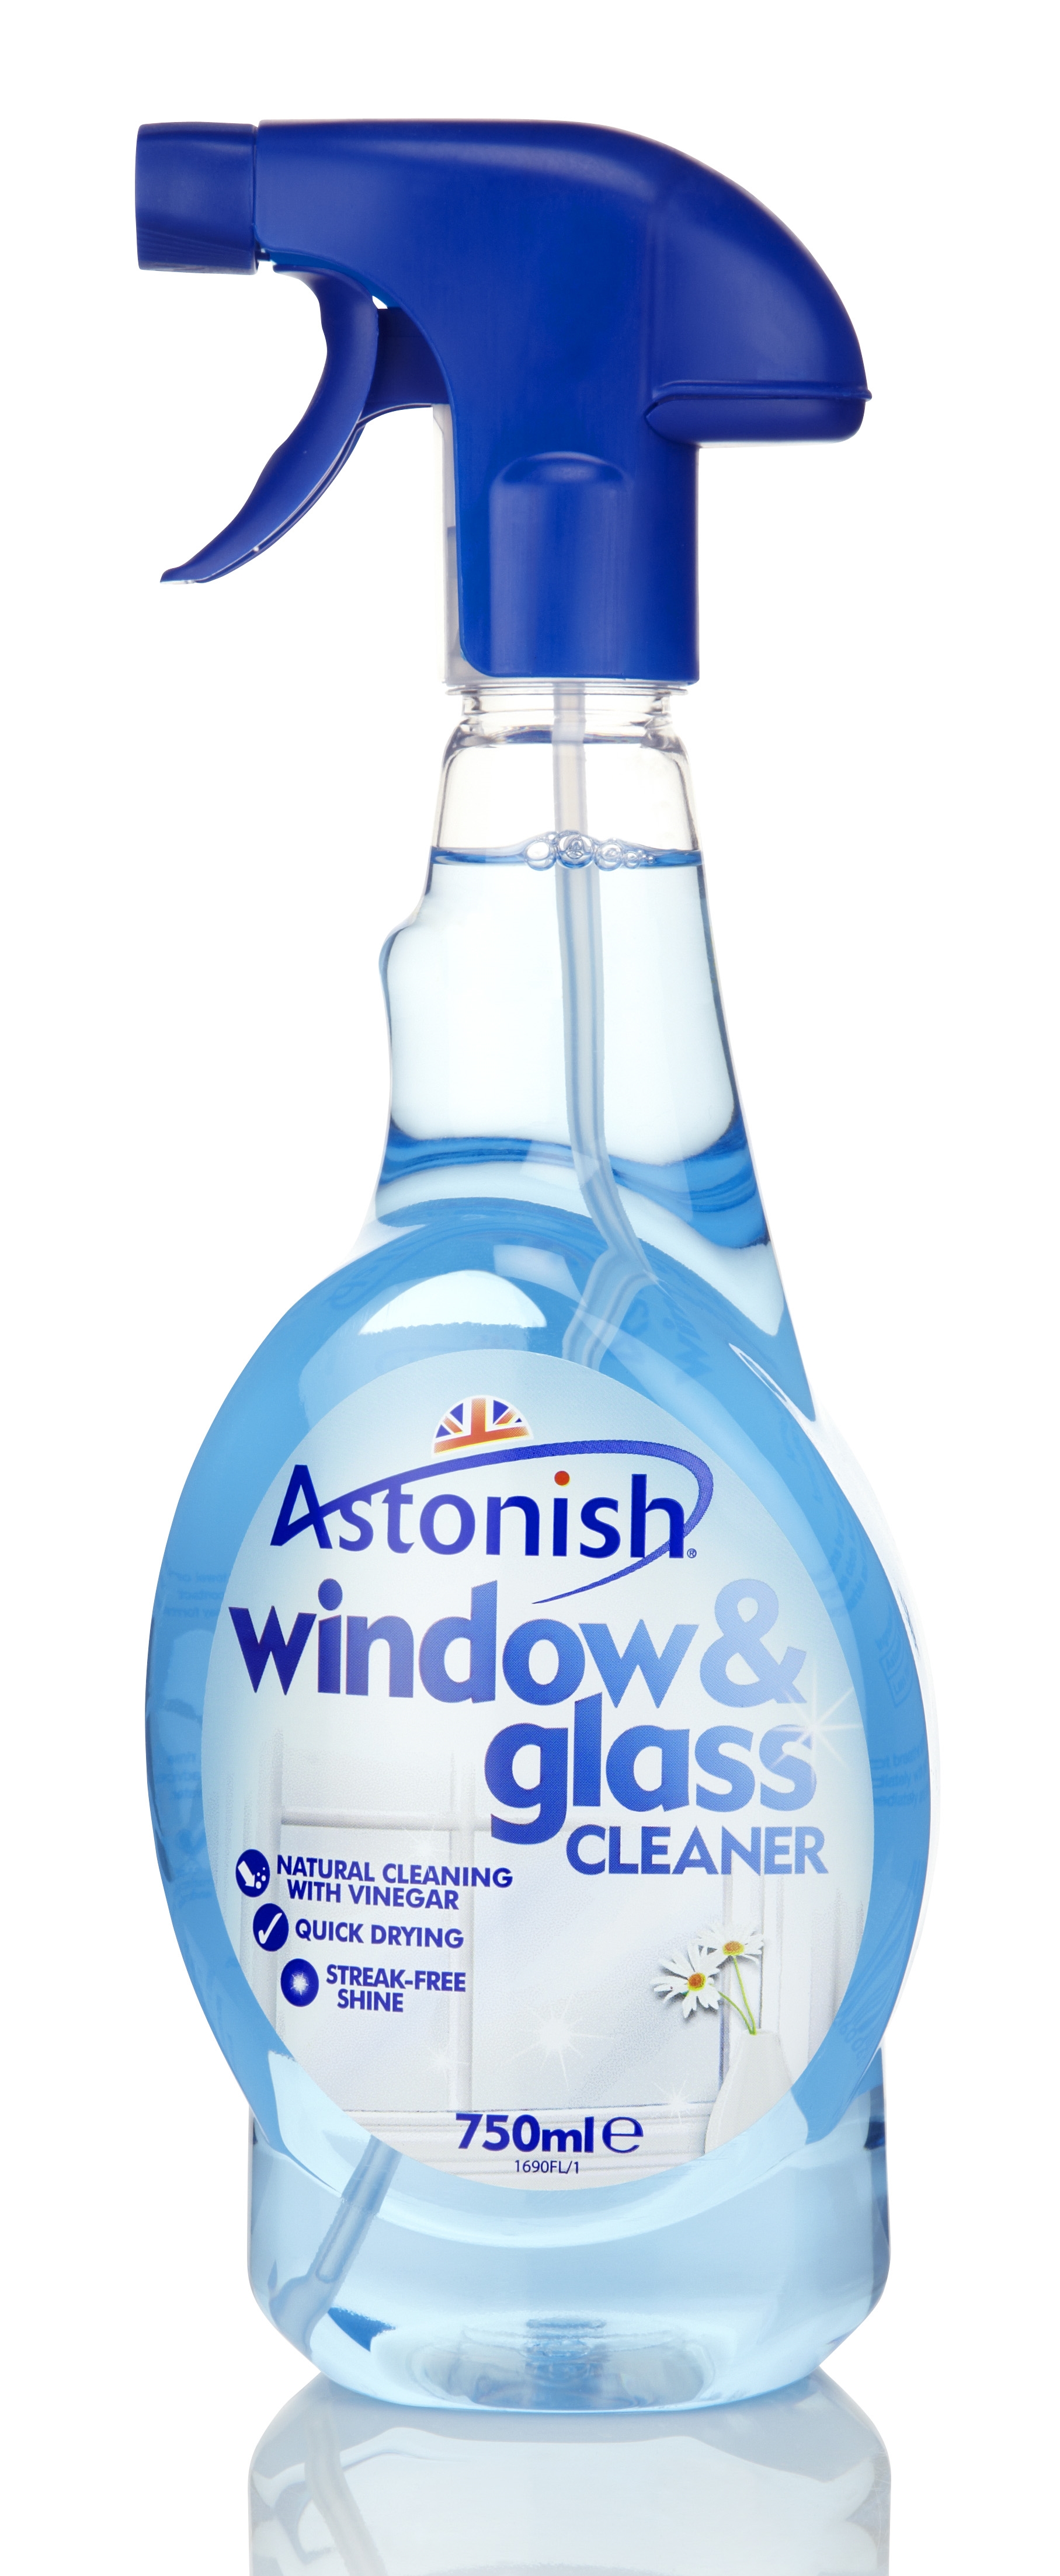 Astonish Window & Glass Cleaner 750ml.jpg